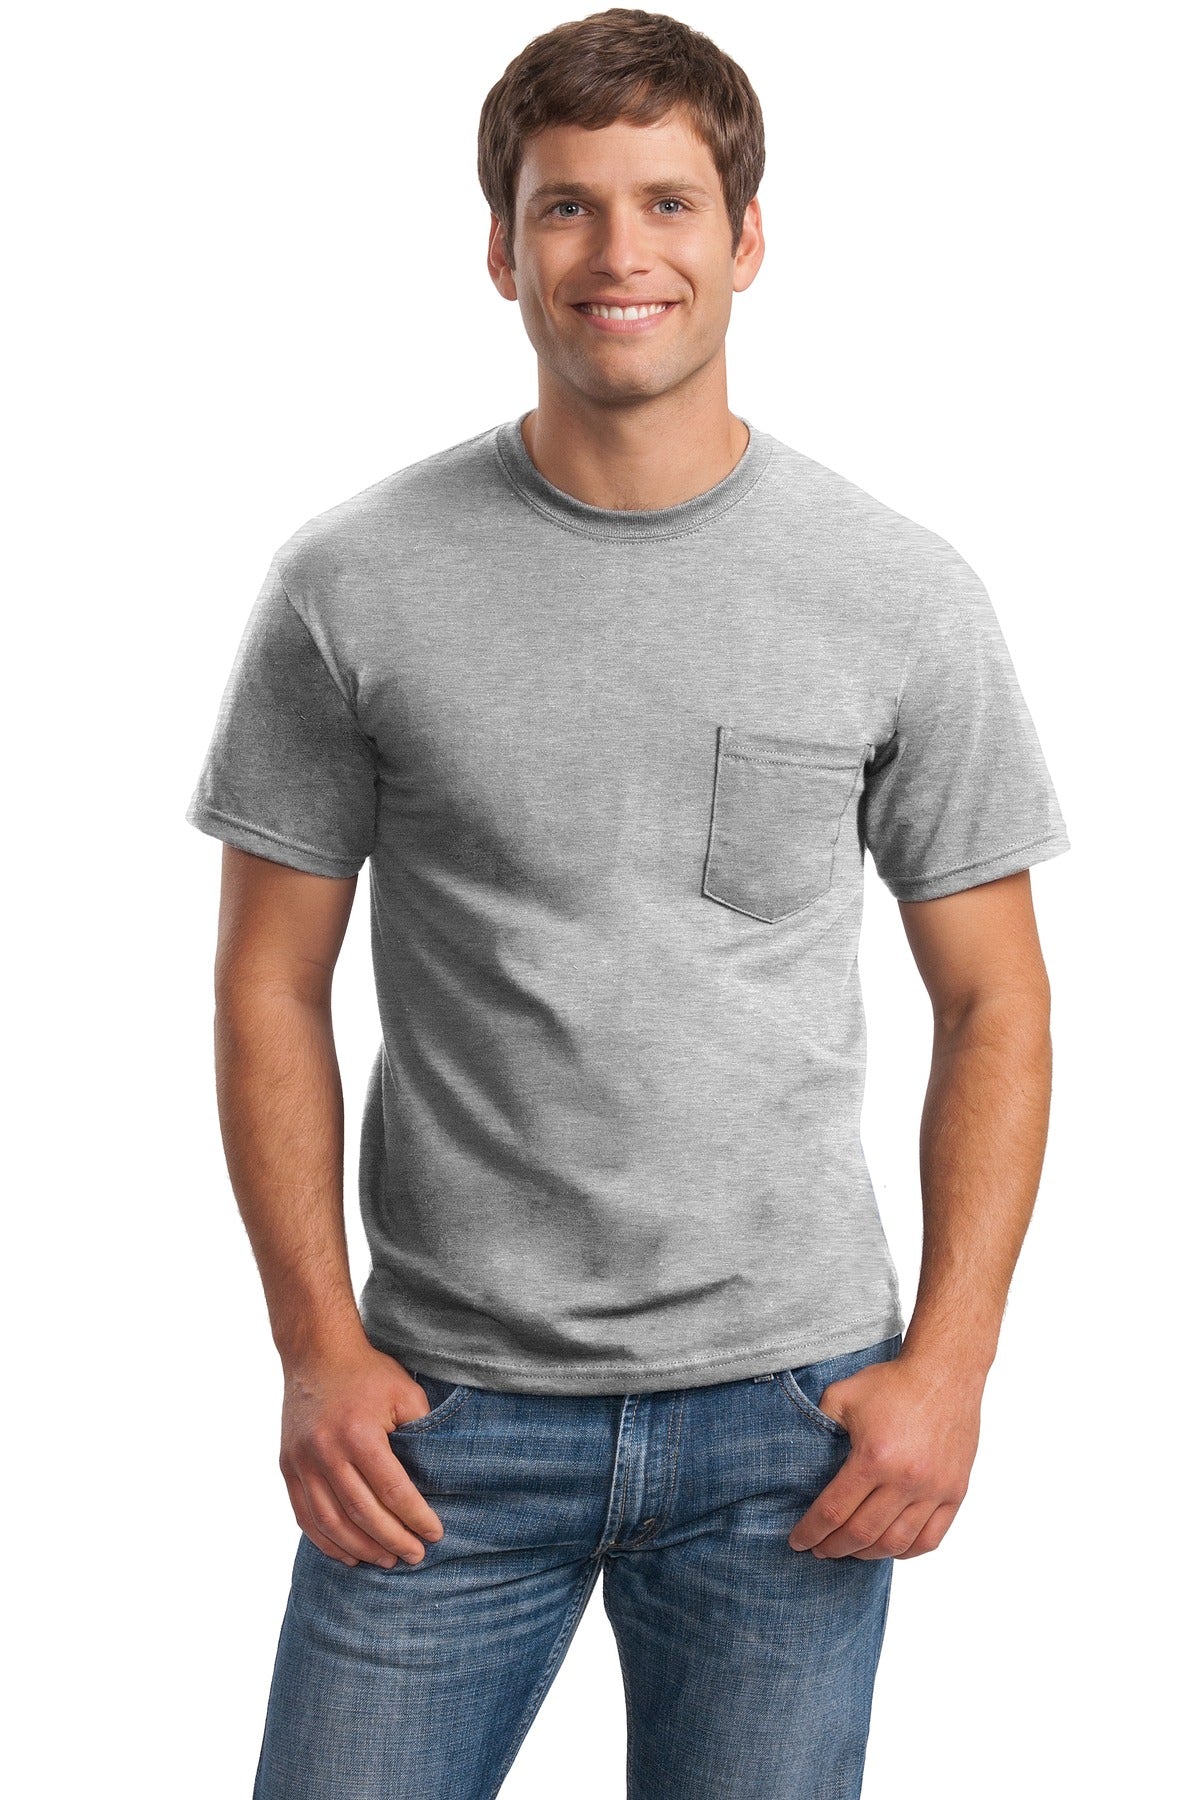 Gildan® - Ultra Cotton® 100% US Cotton T-Shirt with Pocket. 2300 [Ash] - DFW Impression